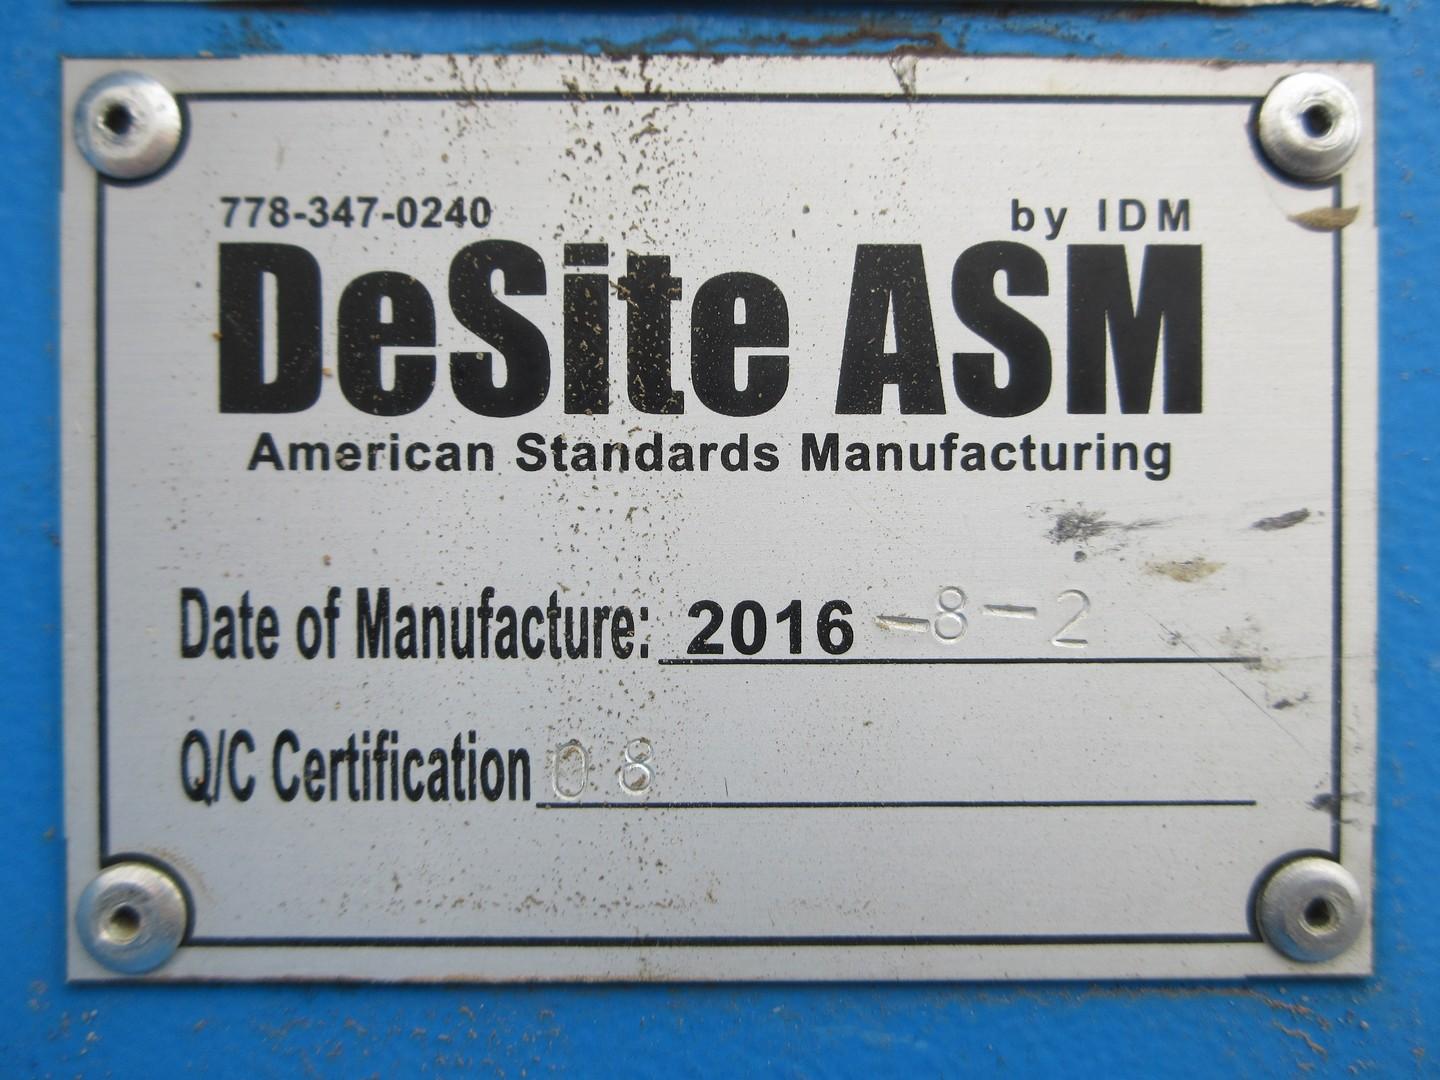 2016 DeSite SLG-108 Electric Box Screener